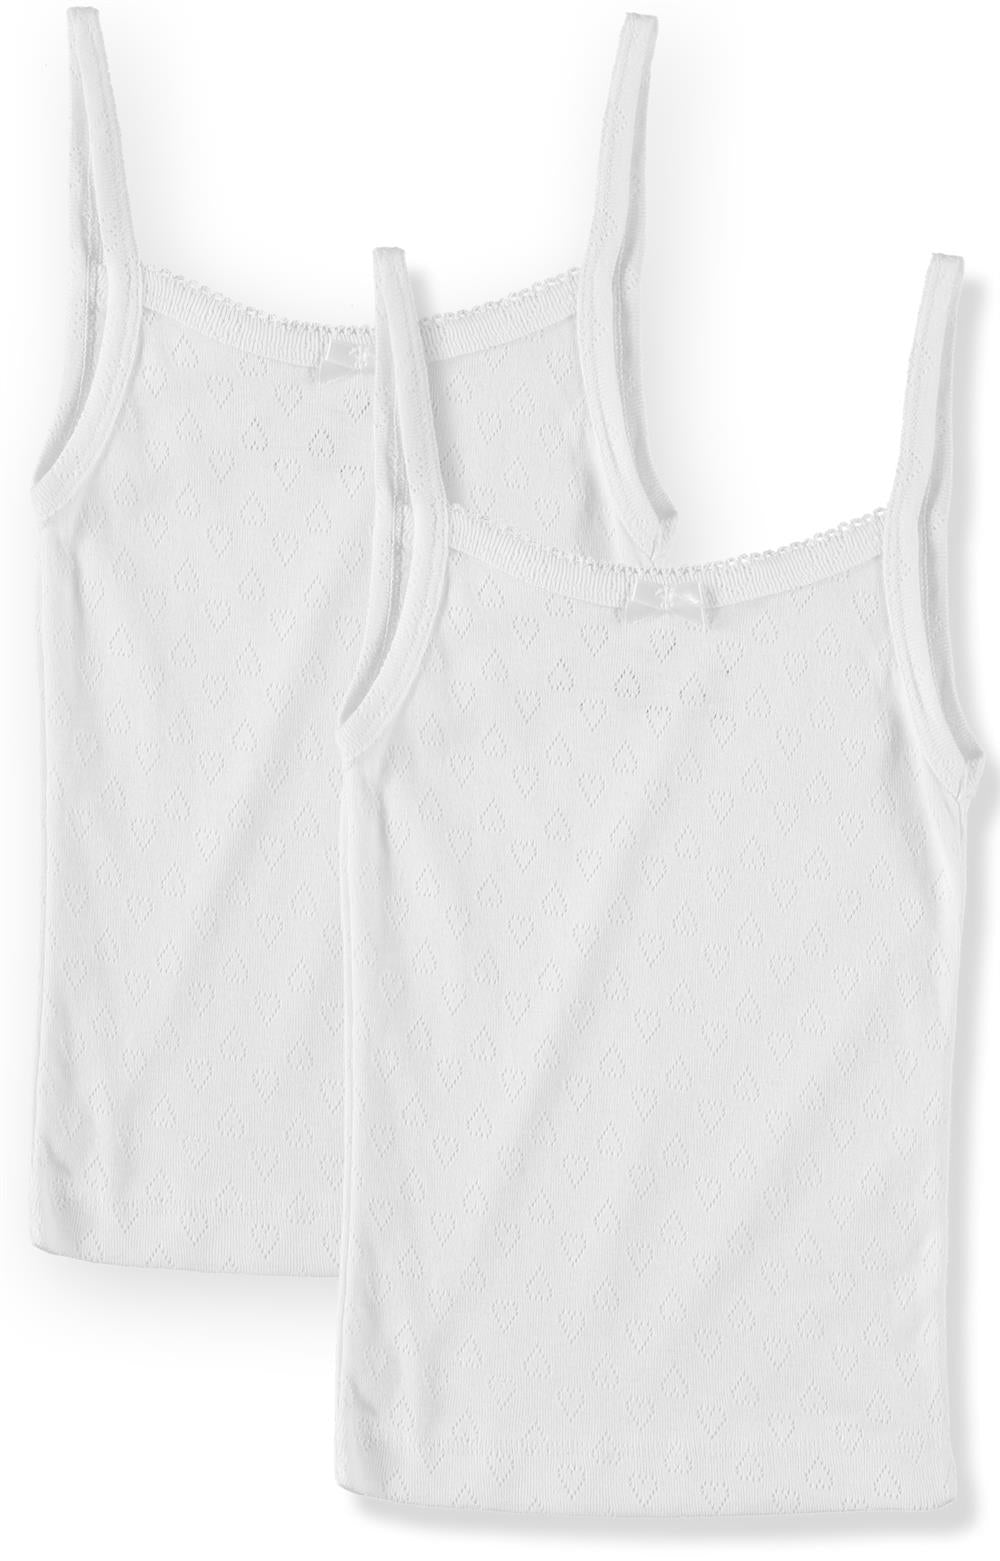 Rene Rofe Girls Undershirt Camisole Tank Tops, White, Large / 10